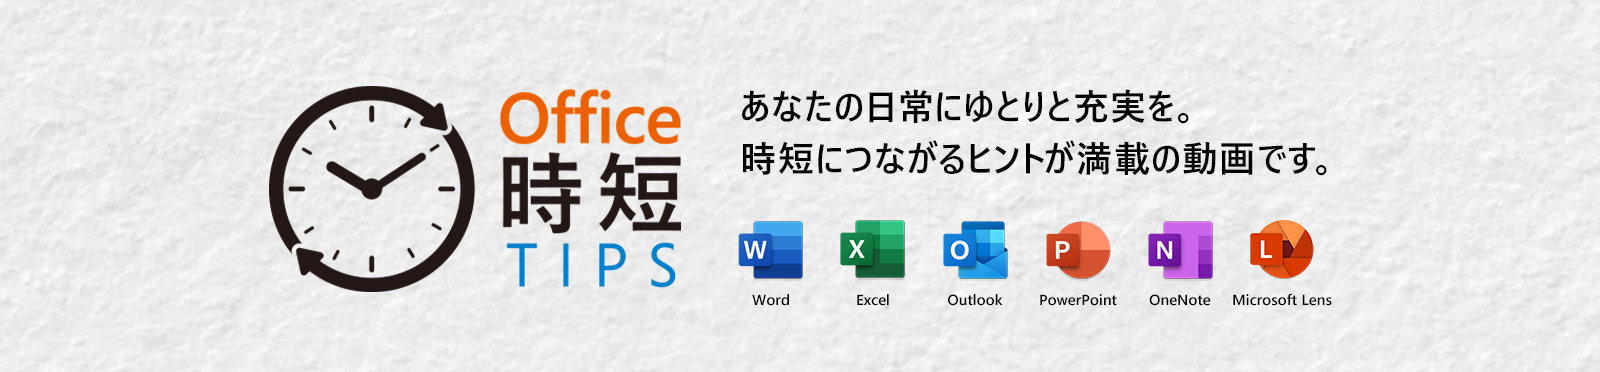 Office 時短 TIPS あなたの日常にゆとりと充実を。時短につながるヒントが満載の動画です。Word Excel Outlook PowerPoint OneNote Microsoft Lens